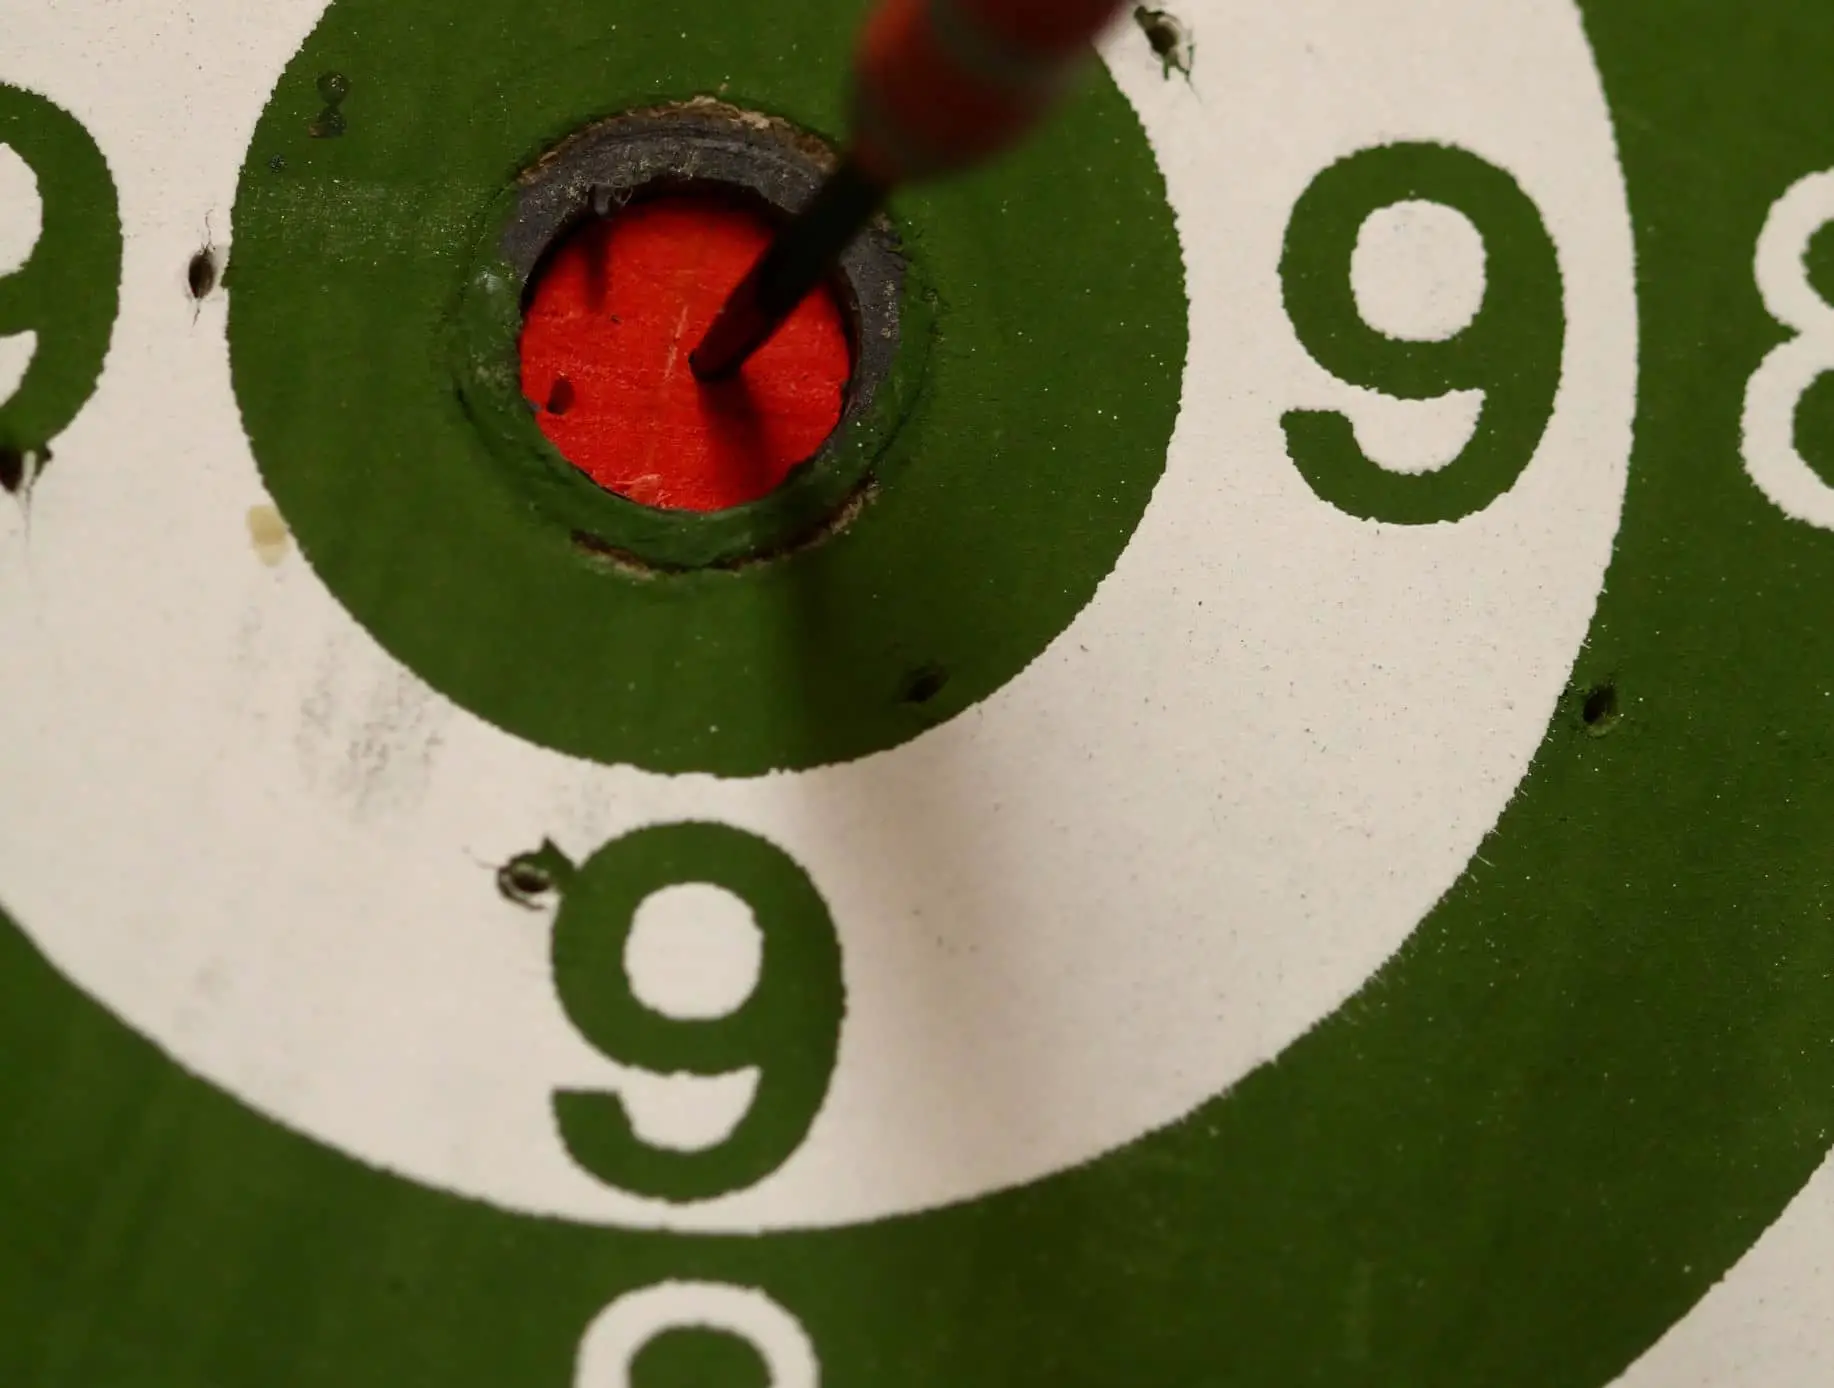 dart board with countdown to bullseye at 10